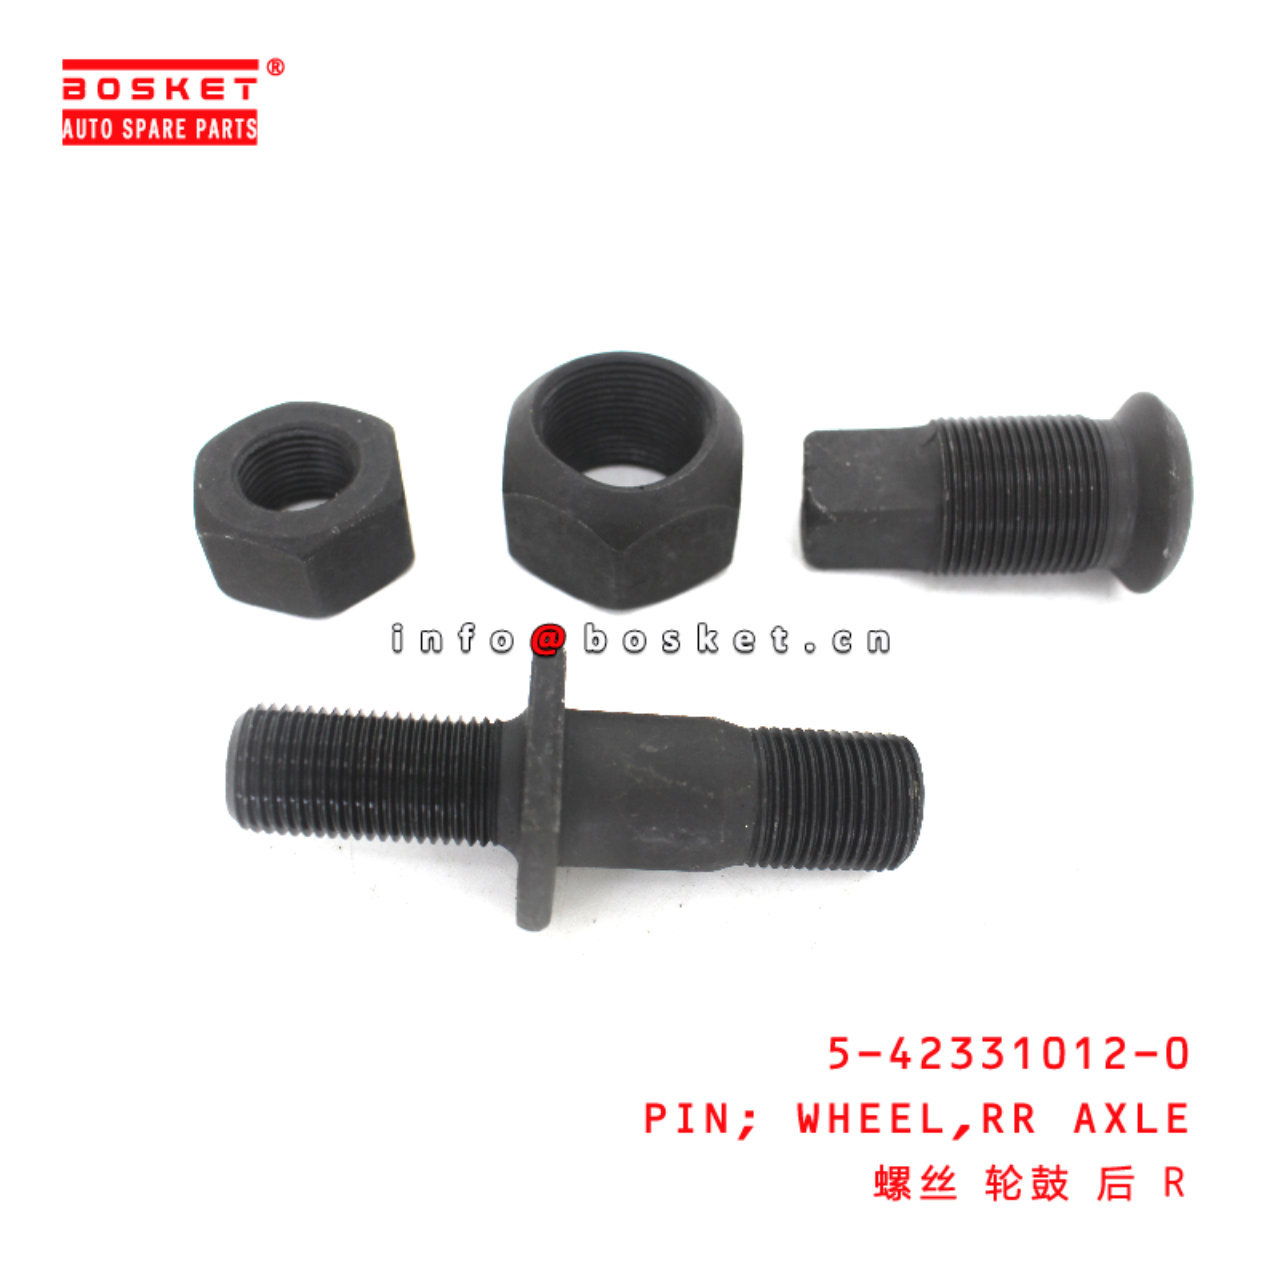 5-42331012-0 Rear Axle Wheel Pin suitable for ISUZU   5423310120